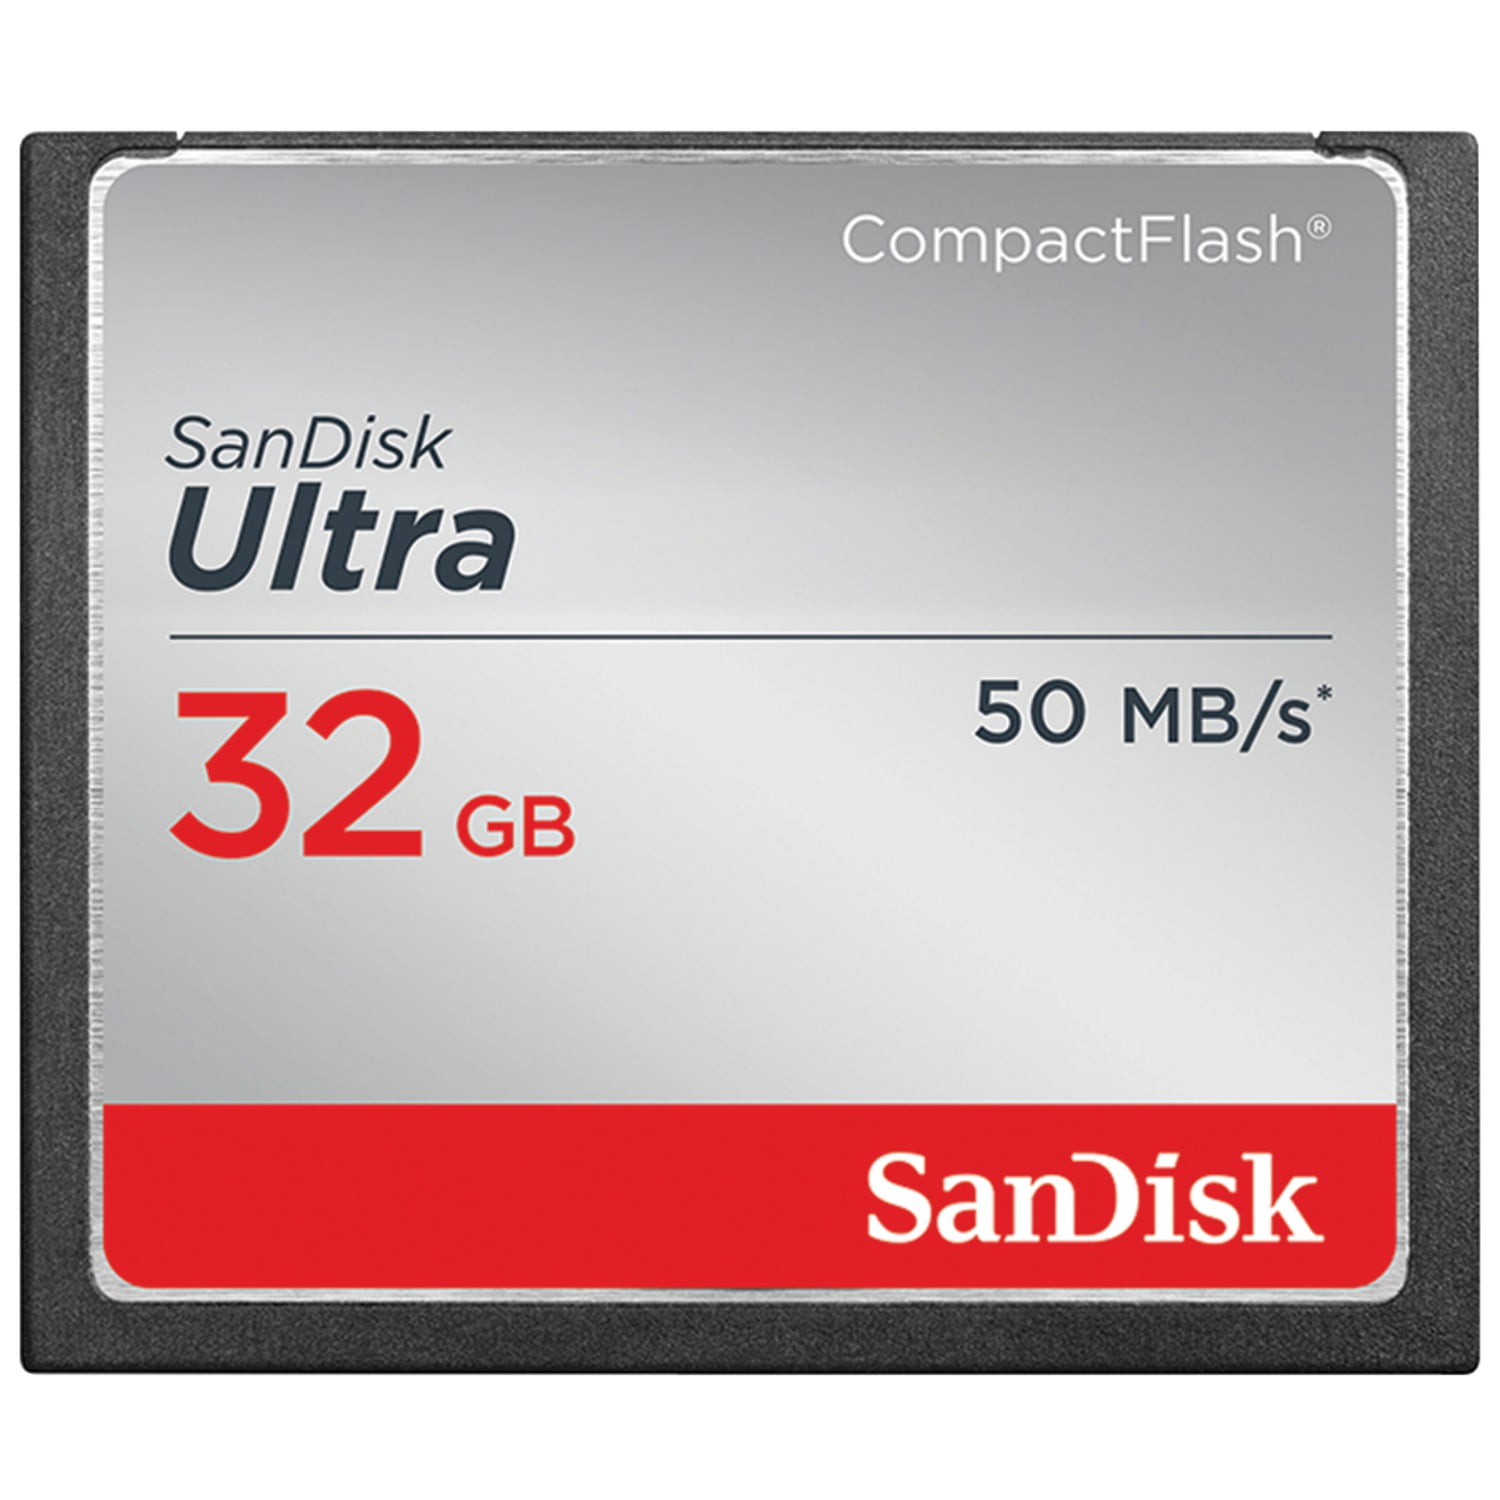 Sandisk 32 Gb Ultra Compactflash Memory Card